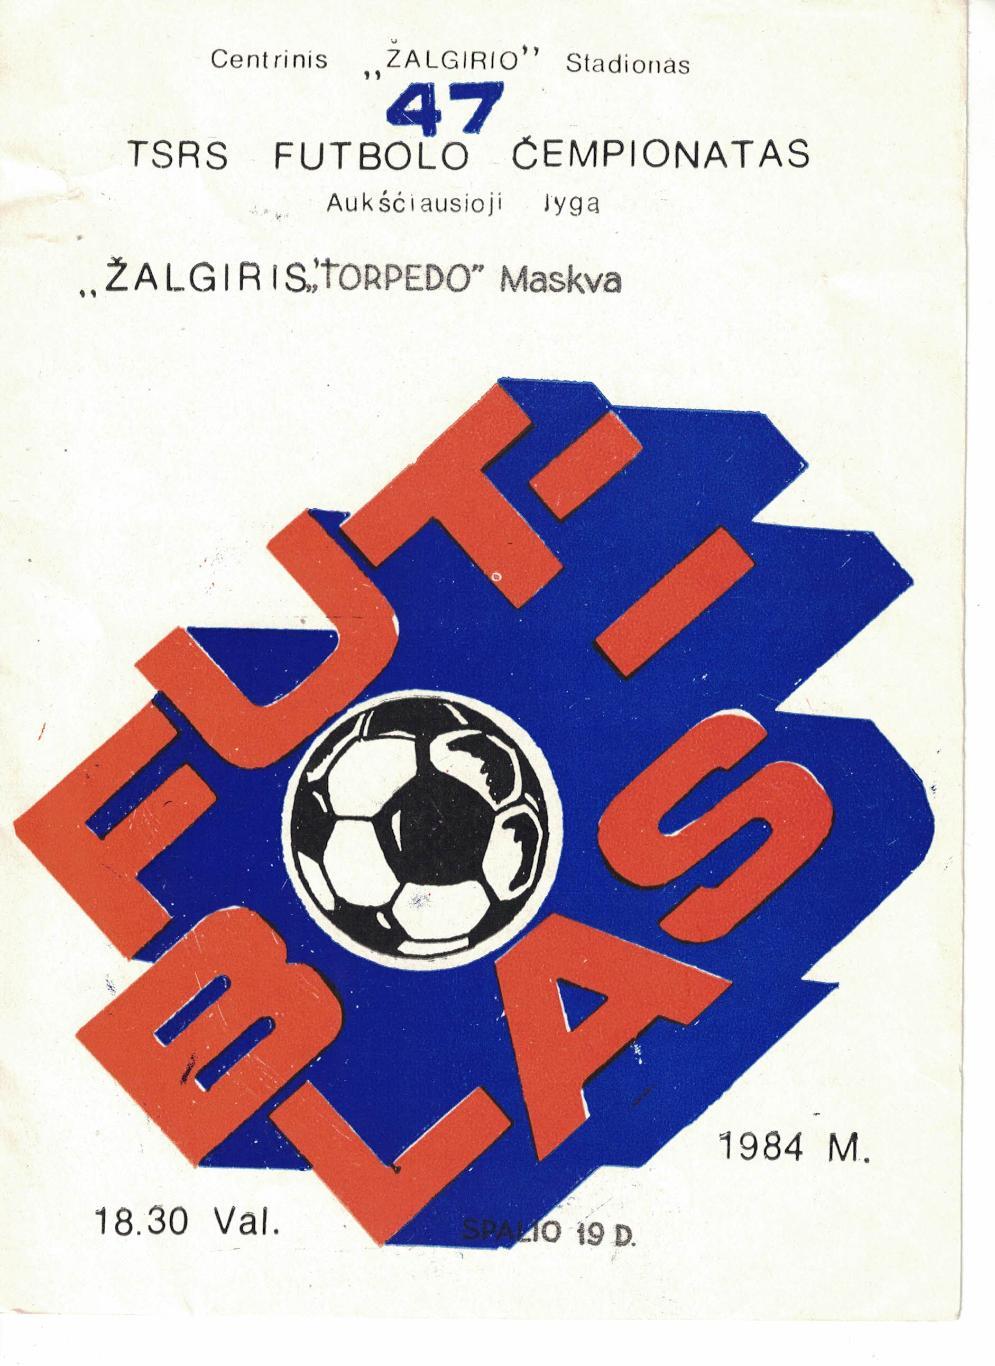 Жальгирис Вильнюс - Торпедо Москва 19.10.1984 Чемпионат СССР 2